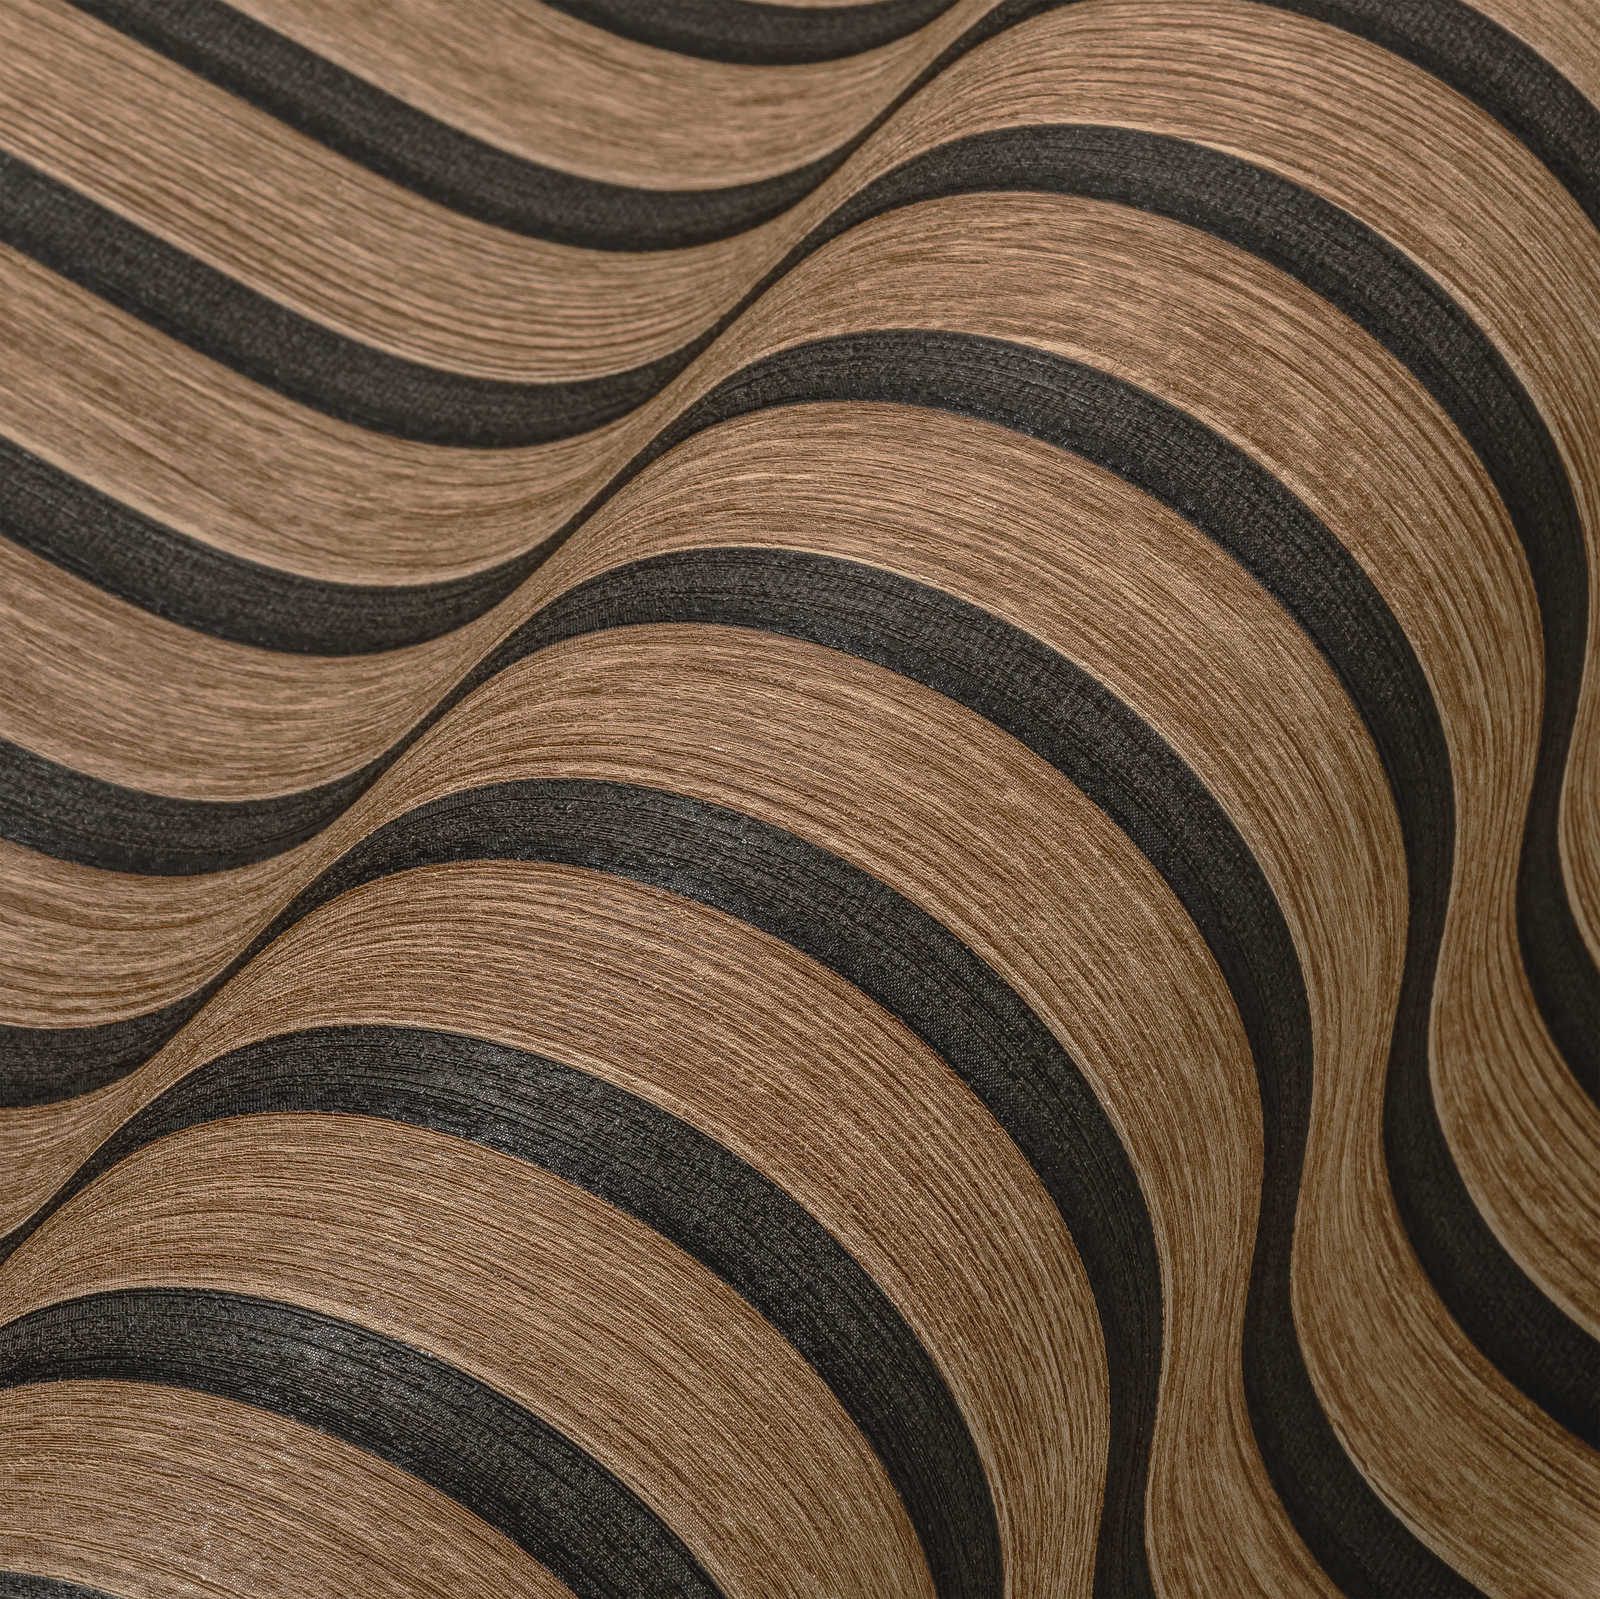             Paneles acústicos papel pintado no tejido aspecto madera realista - Marrón, Negro
        